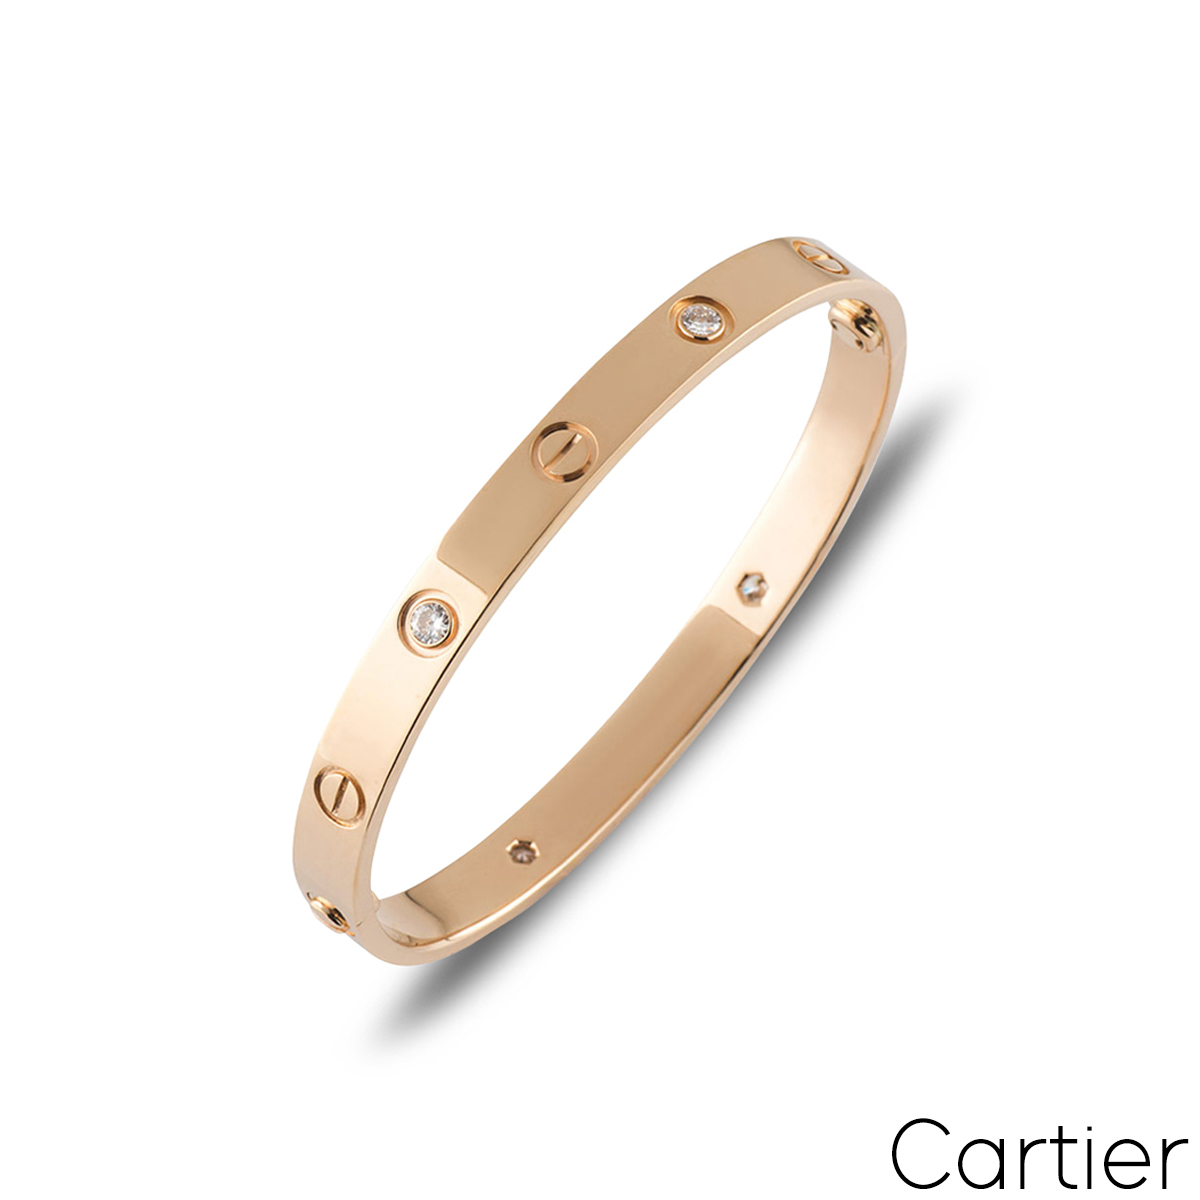 cartier bracelet second hand london